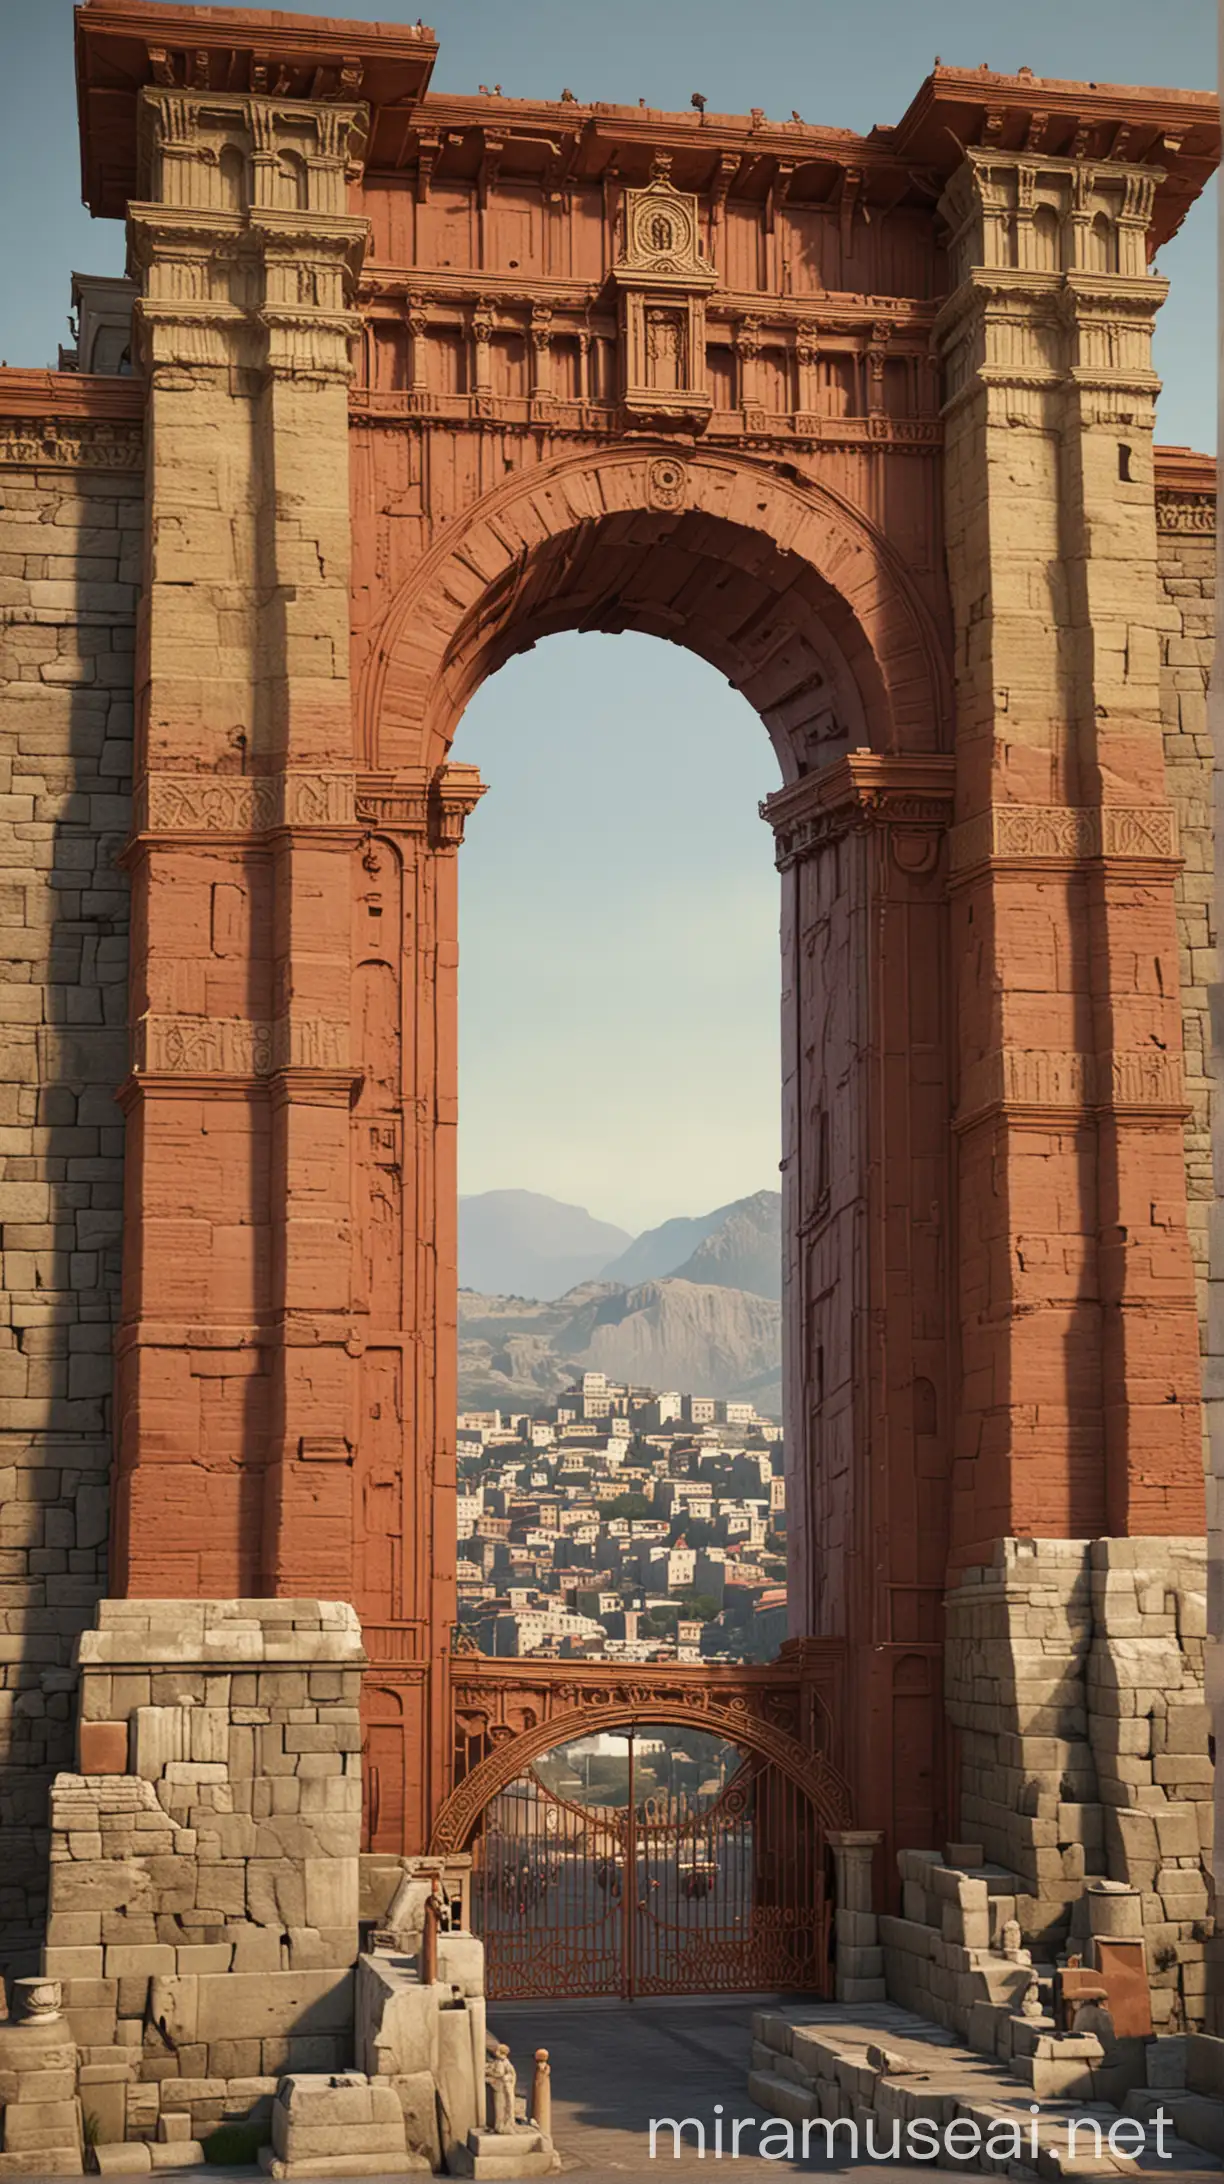 Byzantine Era Golden Gate with Historical Figures Entering